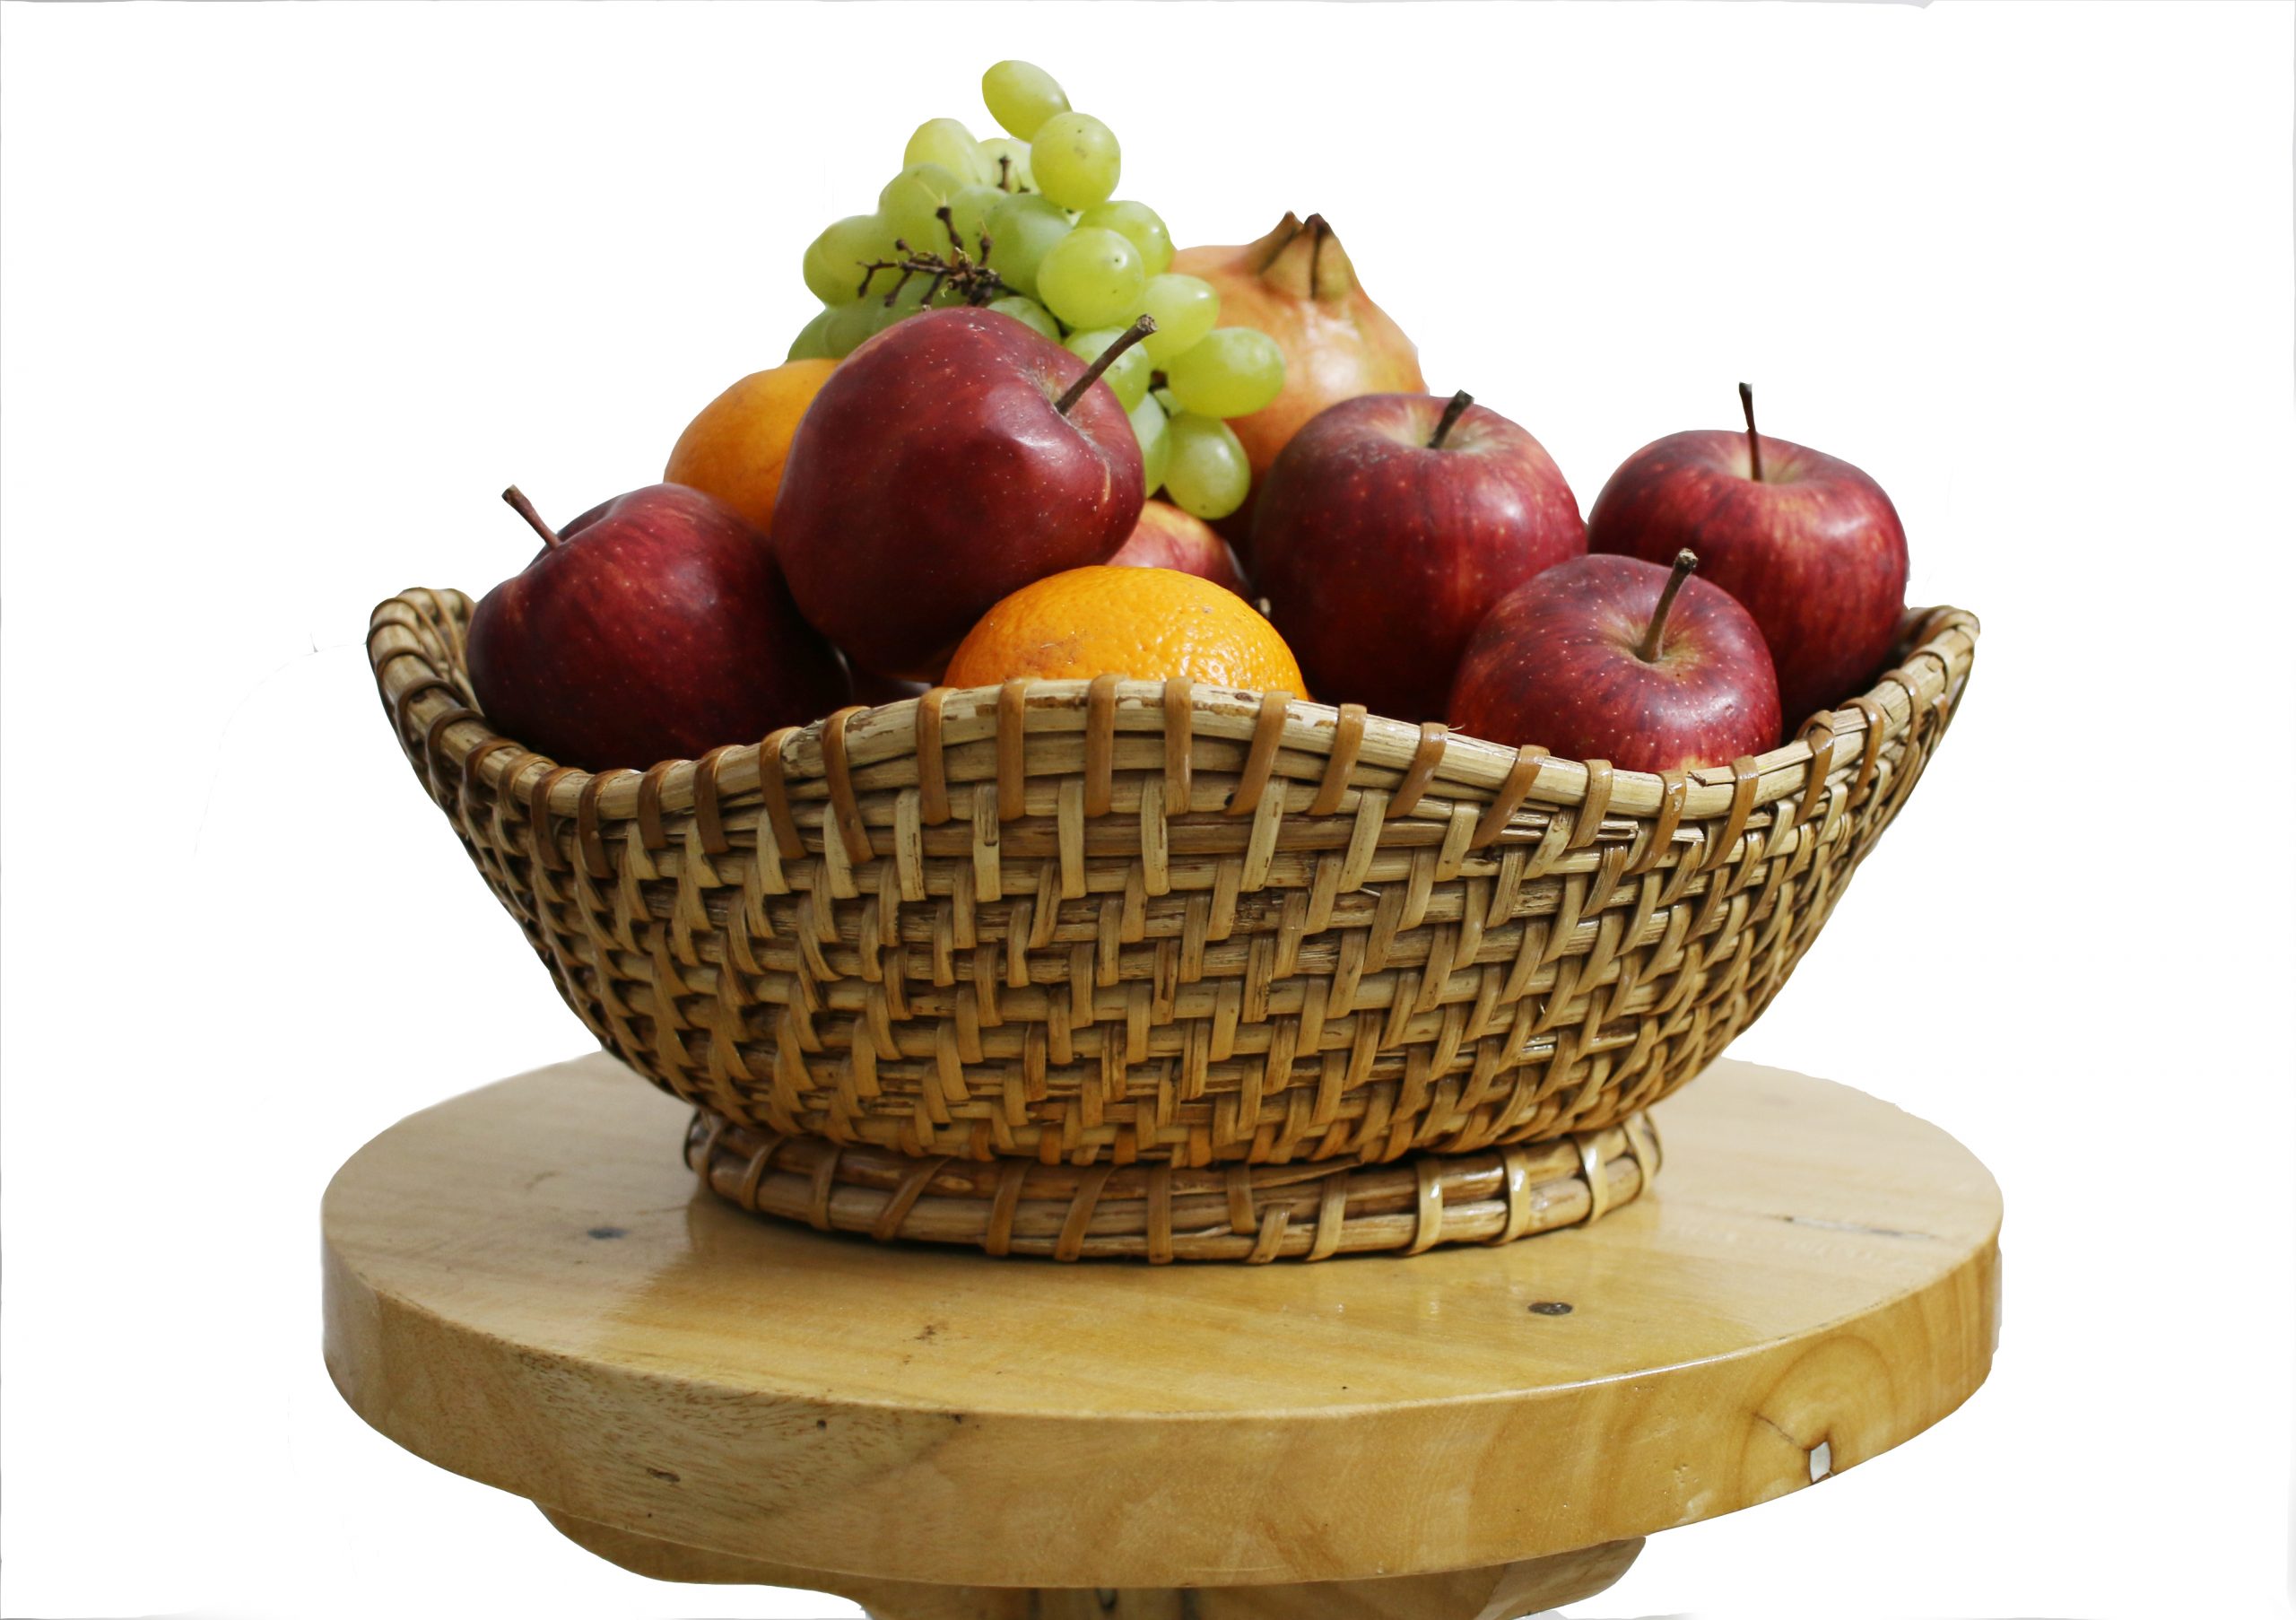 A fresh fruits basket